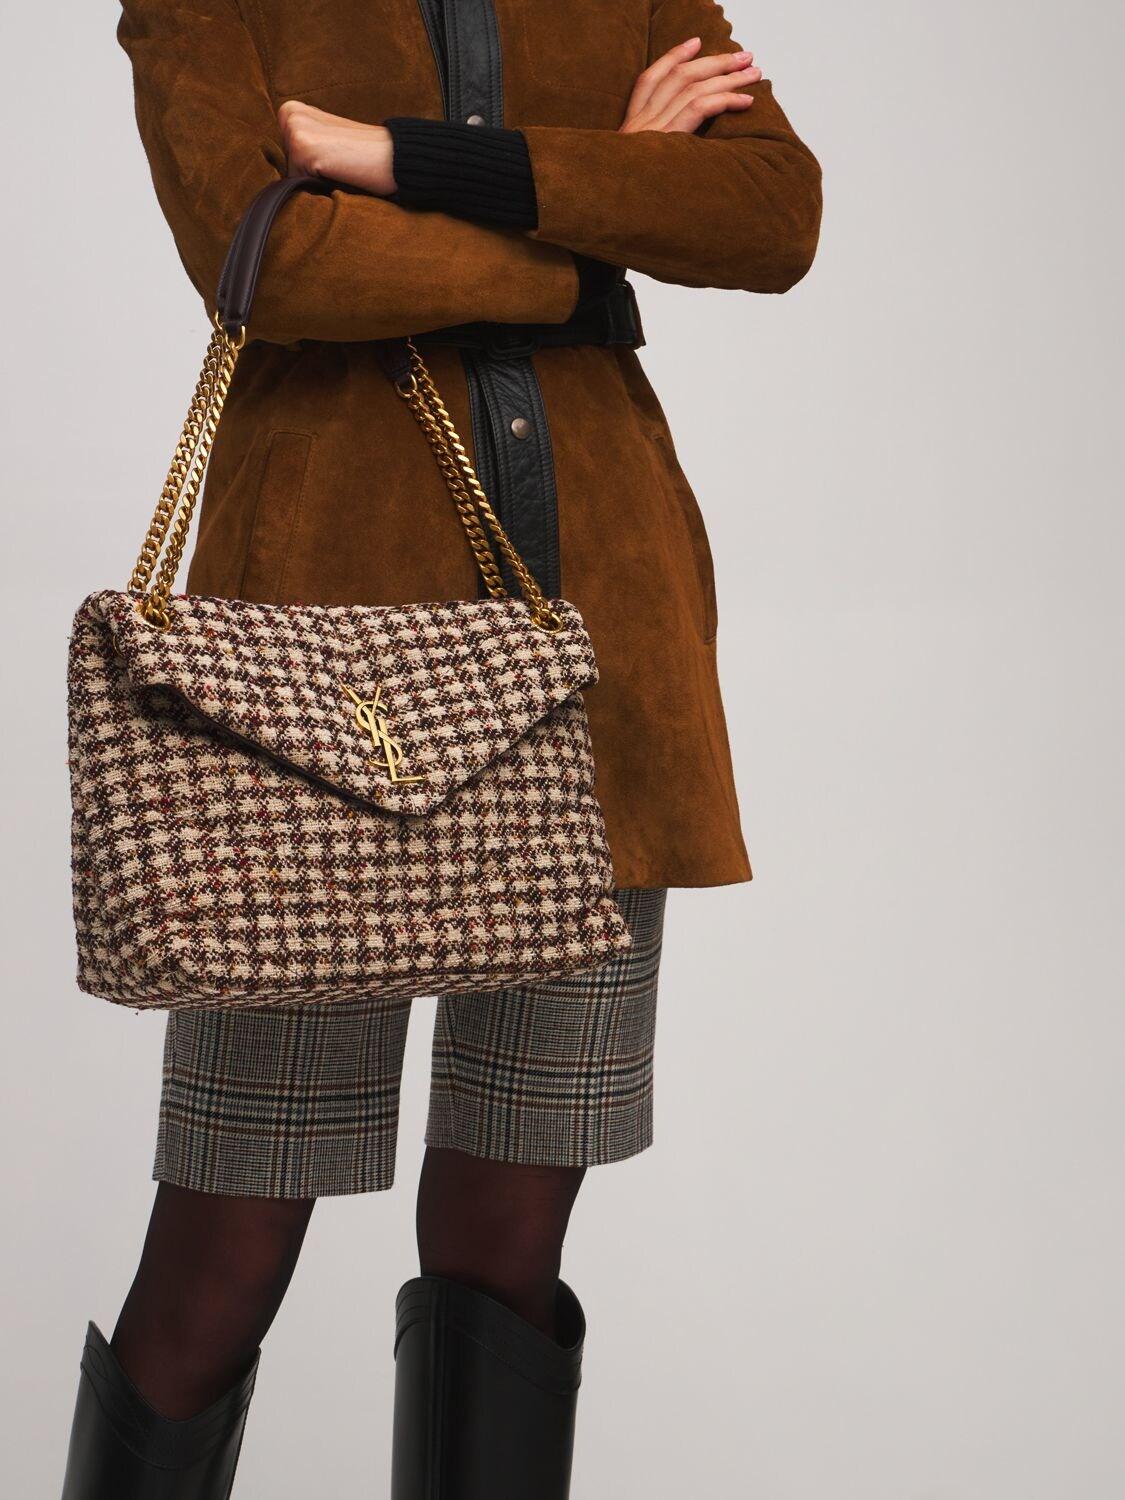 Saint Laurent Medium Loulou Checked Tweed Bag in Natural | Lyst